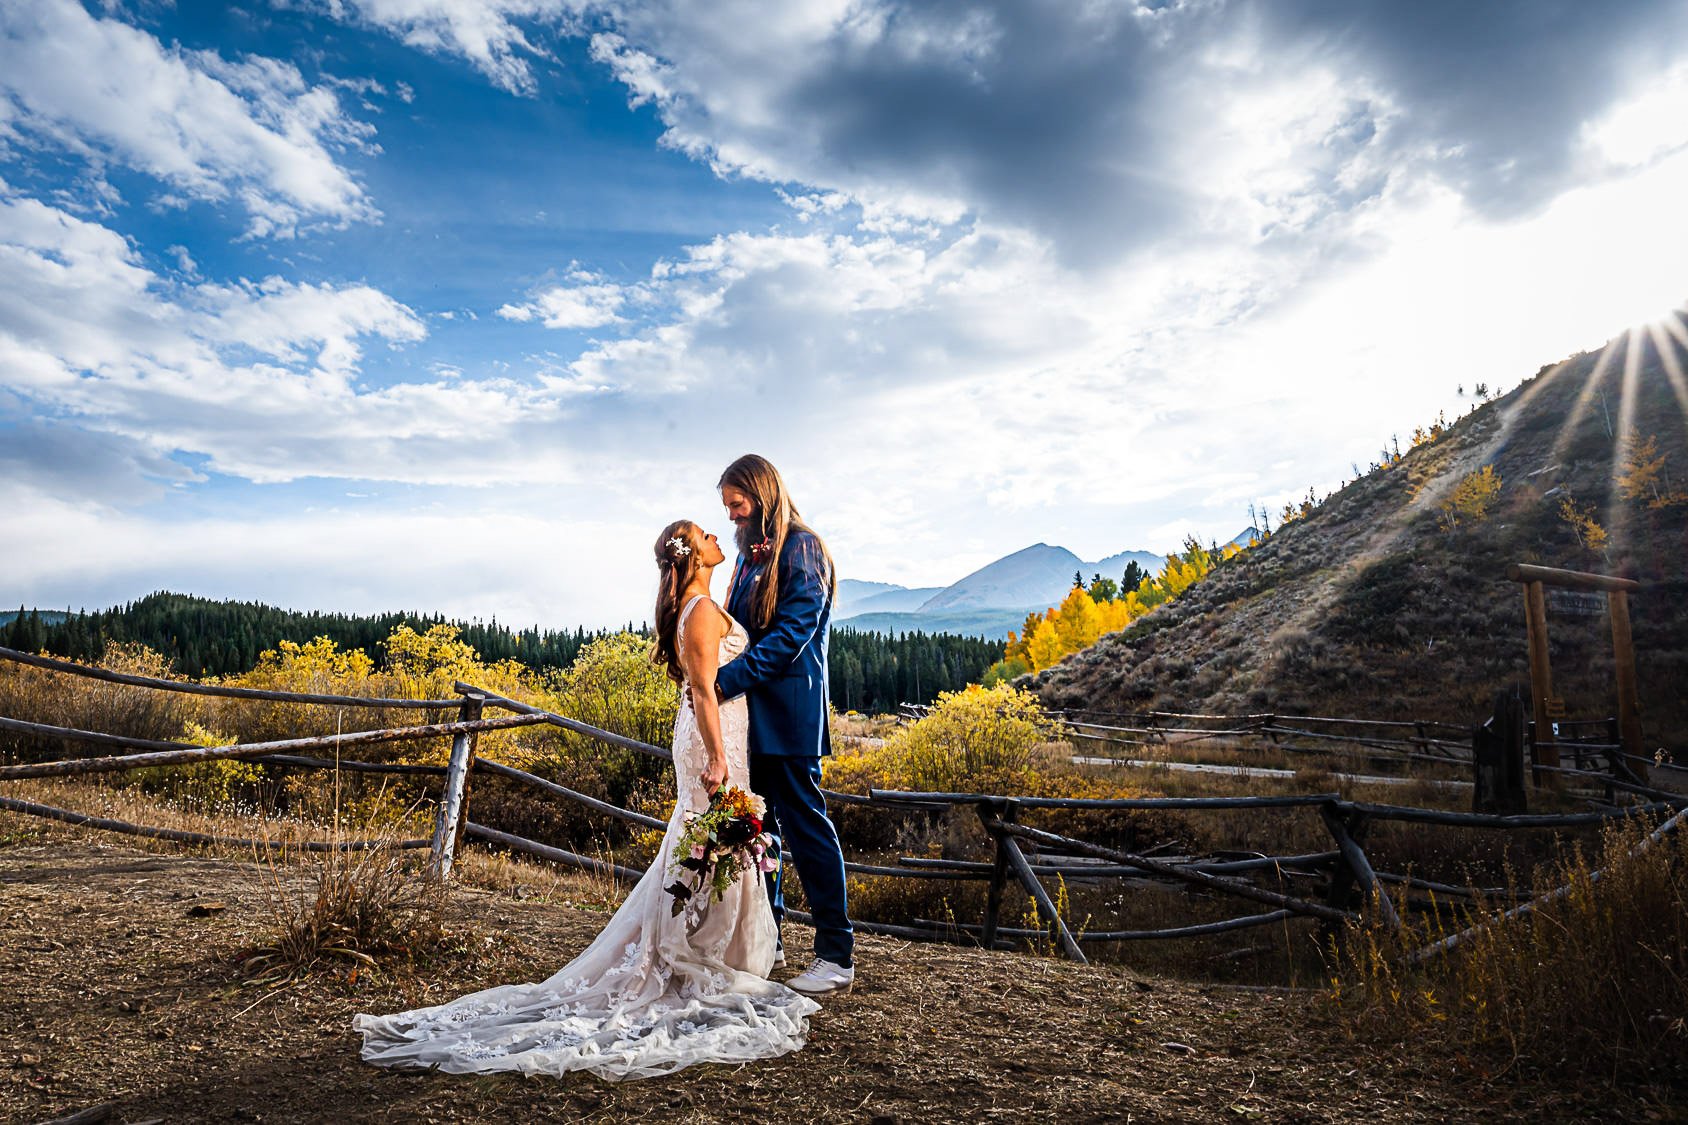 the-lodge-at-breckenridge-colorado-fall-wedding-jason-batch-photographer 15 copy-2.jpg